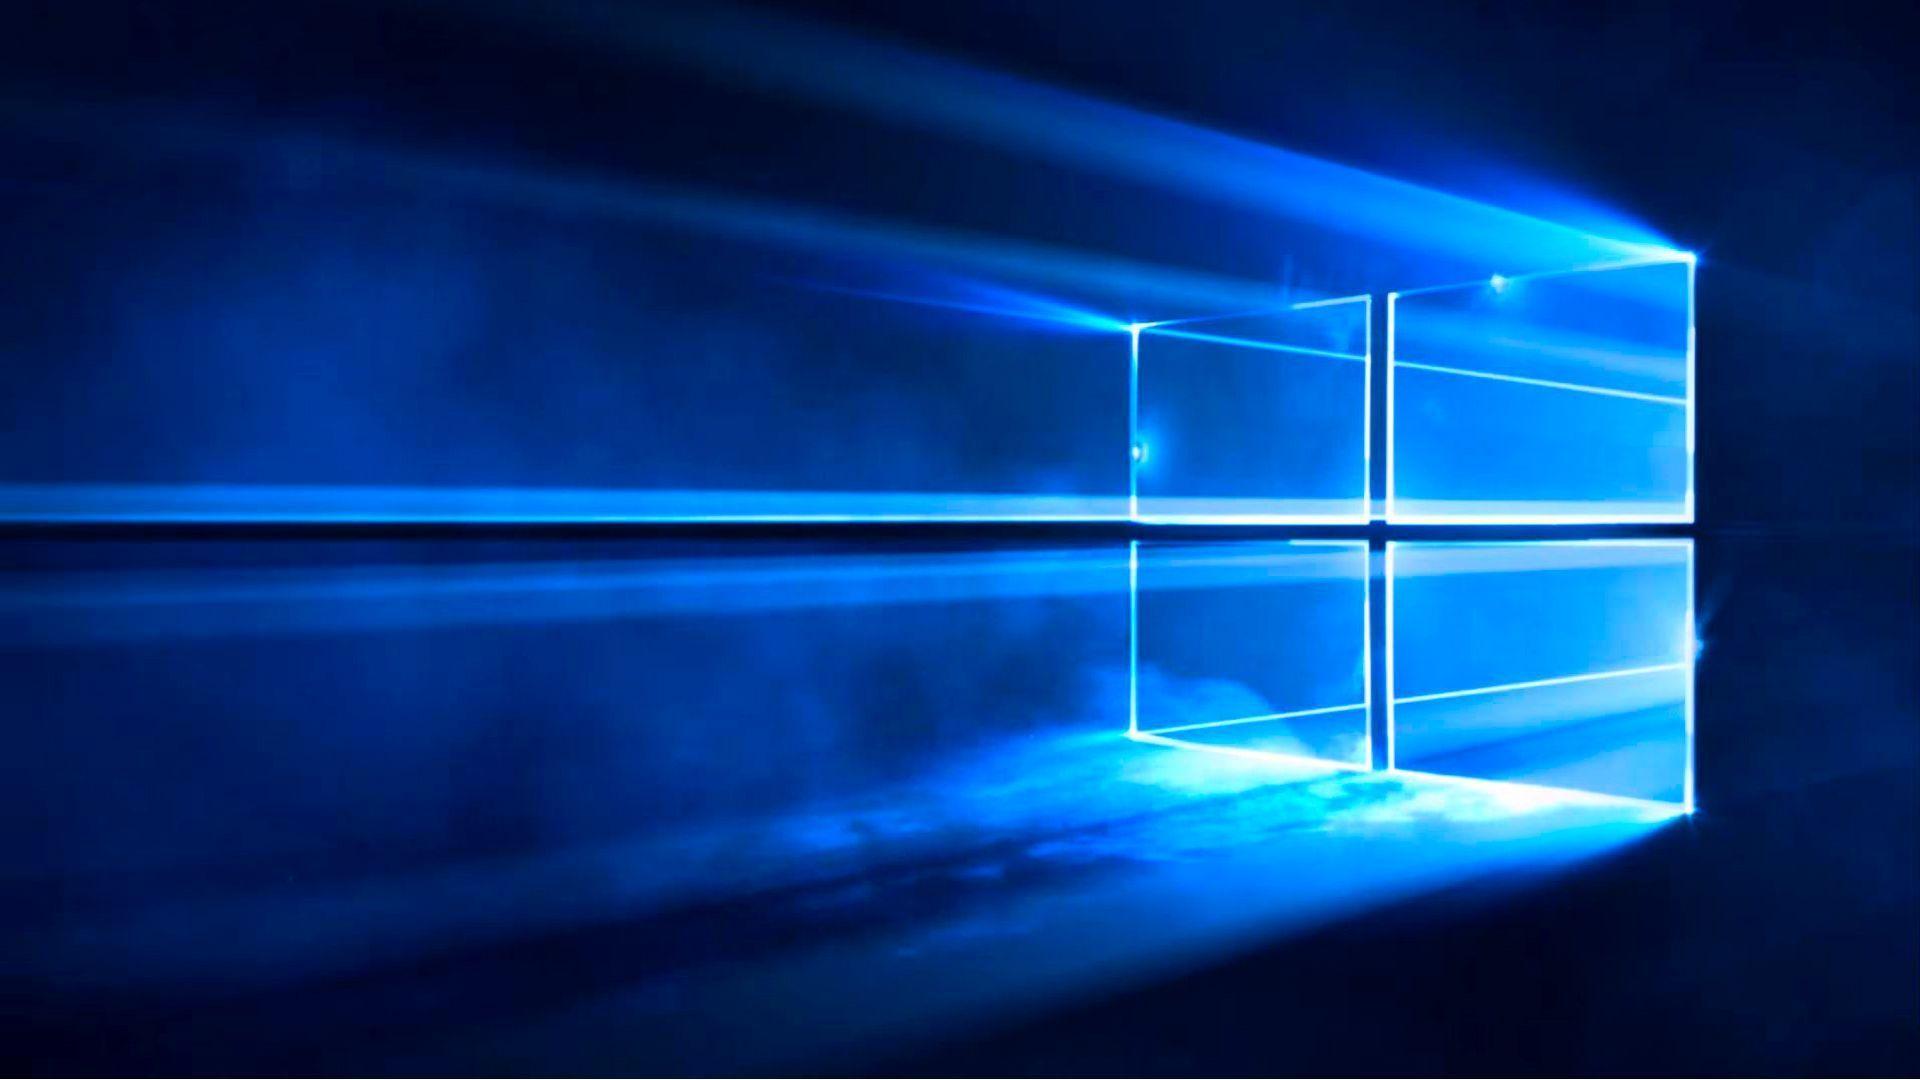 Microsoft Windows 10 Full HD Pics Wallpaper 15197